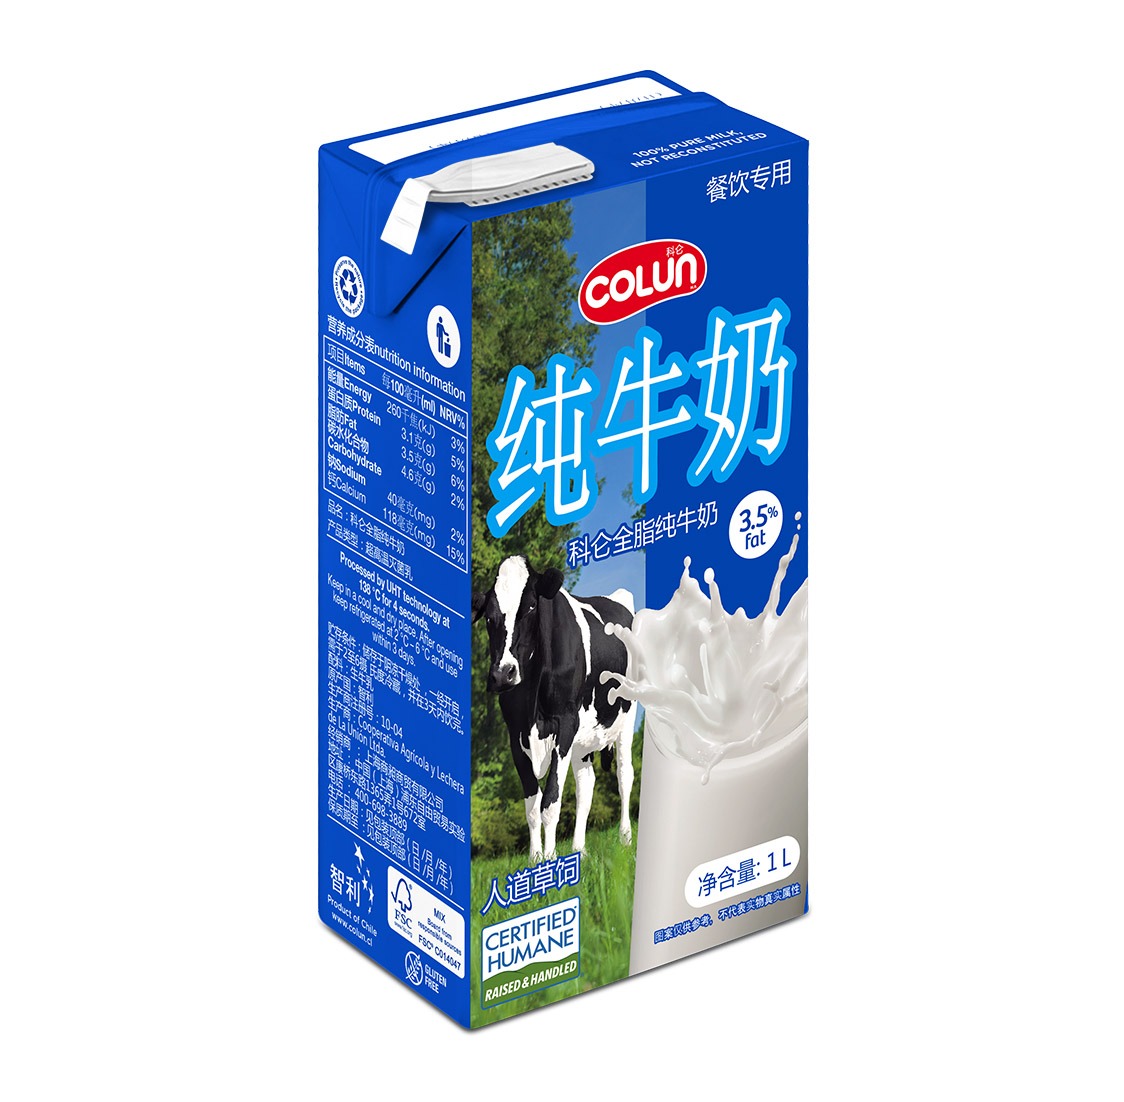 Whole Colun Milk 1 Lt